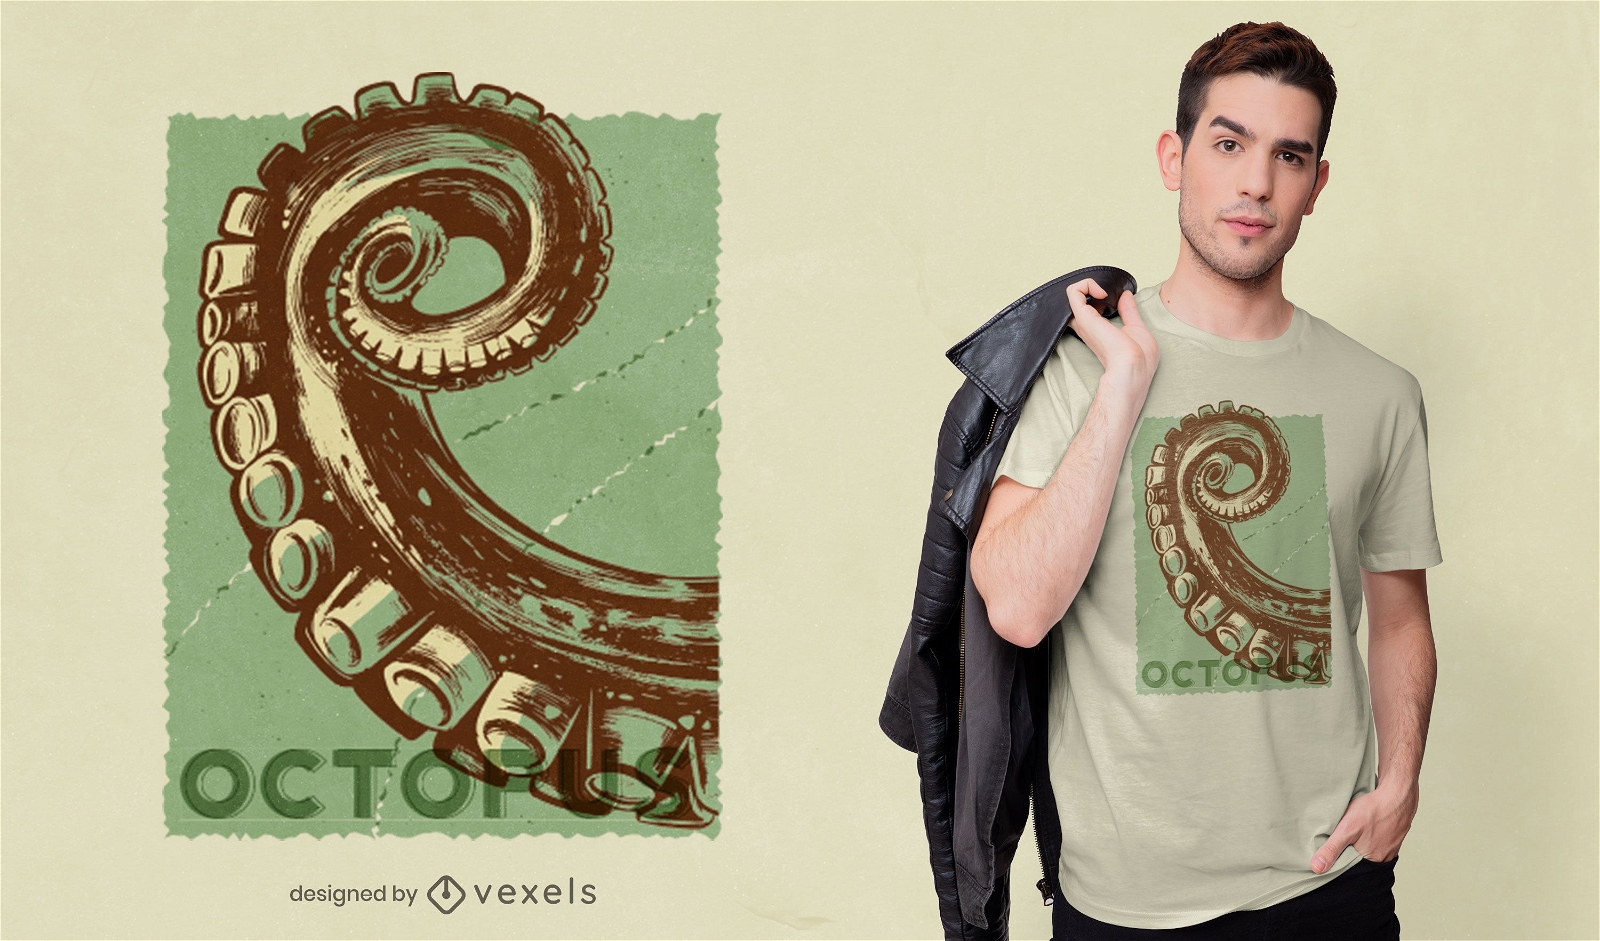 Octopus tentacle t-shirt design